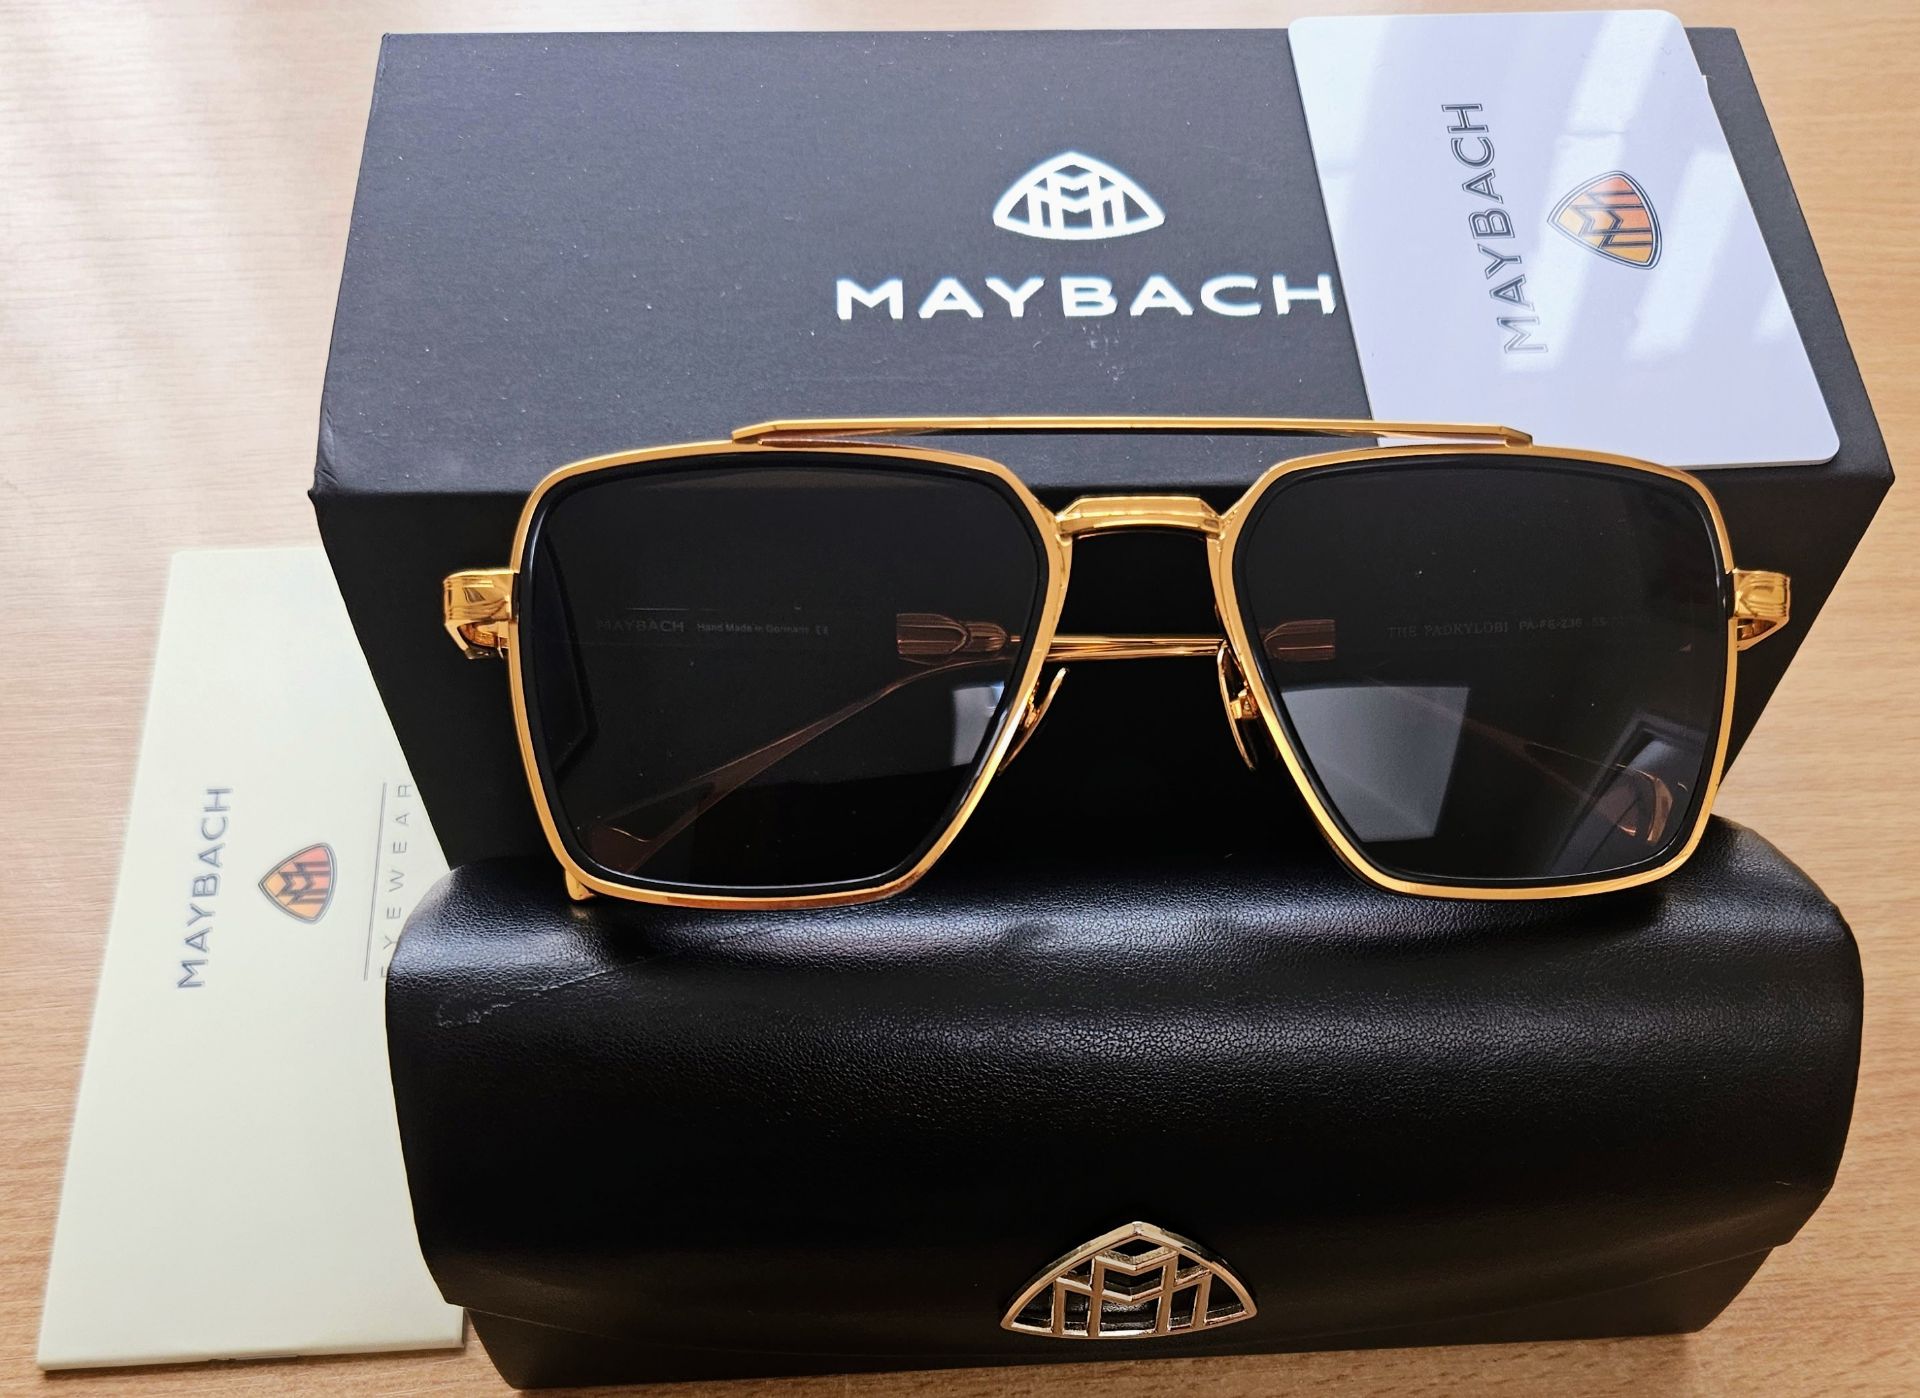 Maybach Sunglasses PA-FE-Z36 Gold - Image 2 of 3